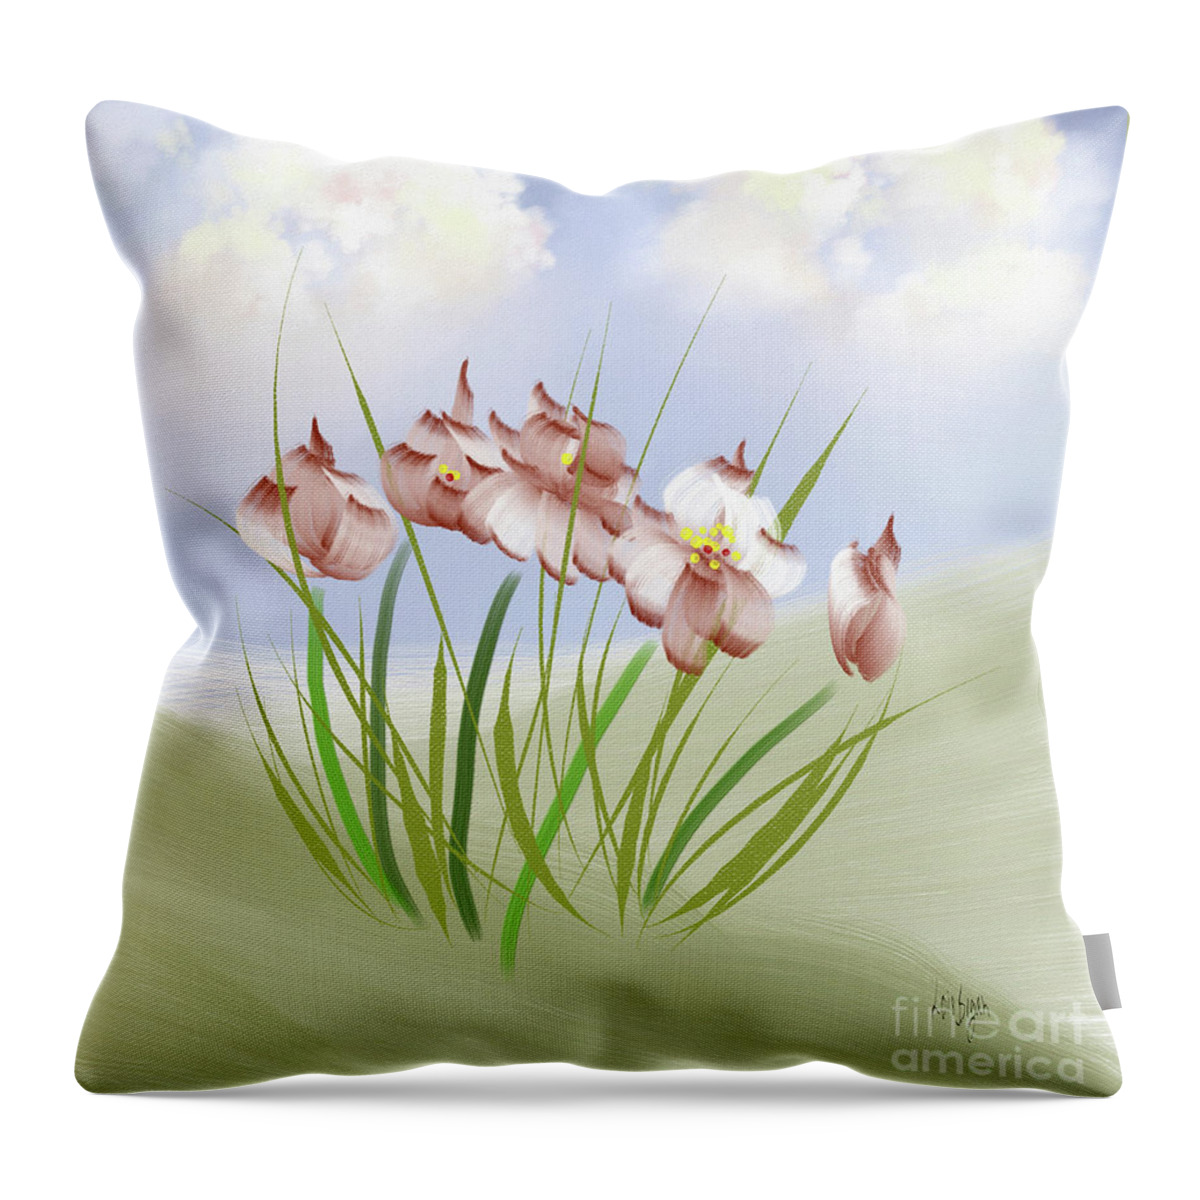 Flower Throw Pillow featuring the digital art Flowers On The Hillside by Lois Bryan